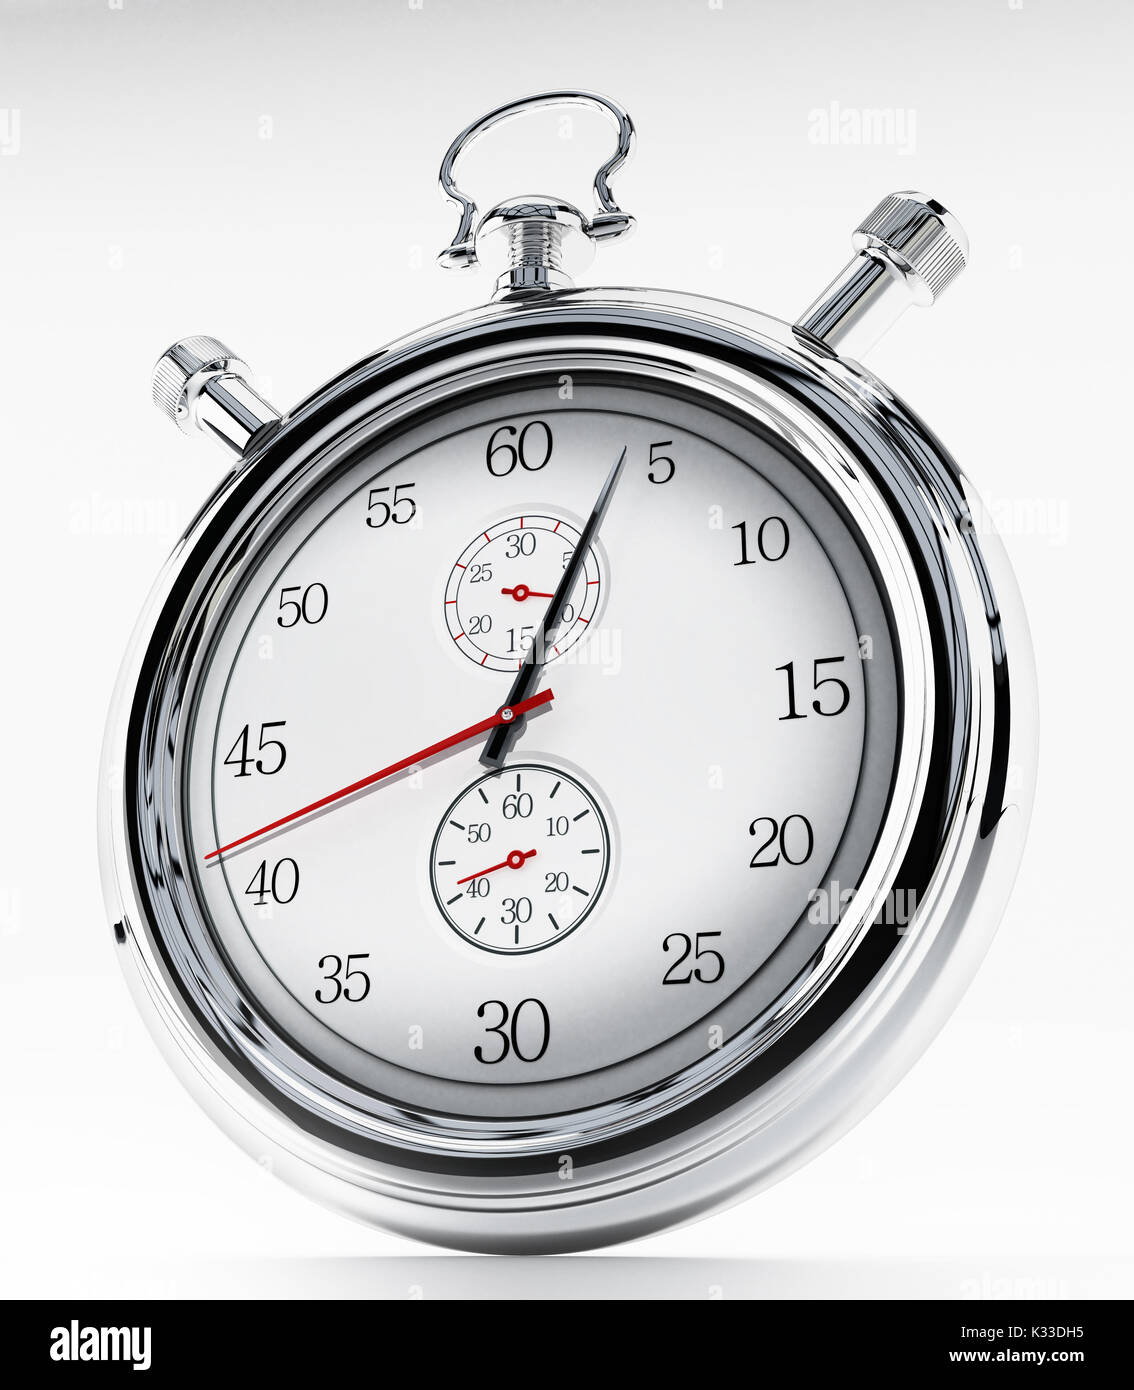 Fictitious analogue chronometer isolated on white background. 3D illustration. Stock Photo